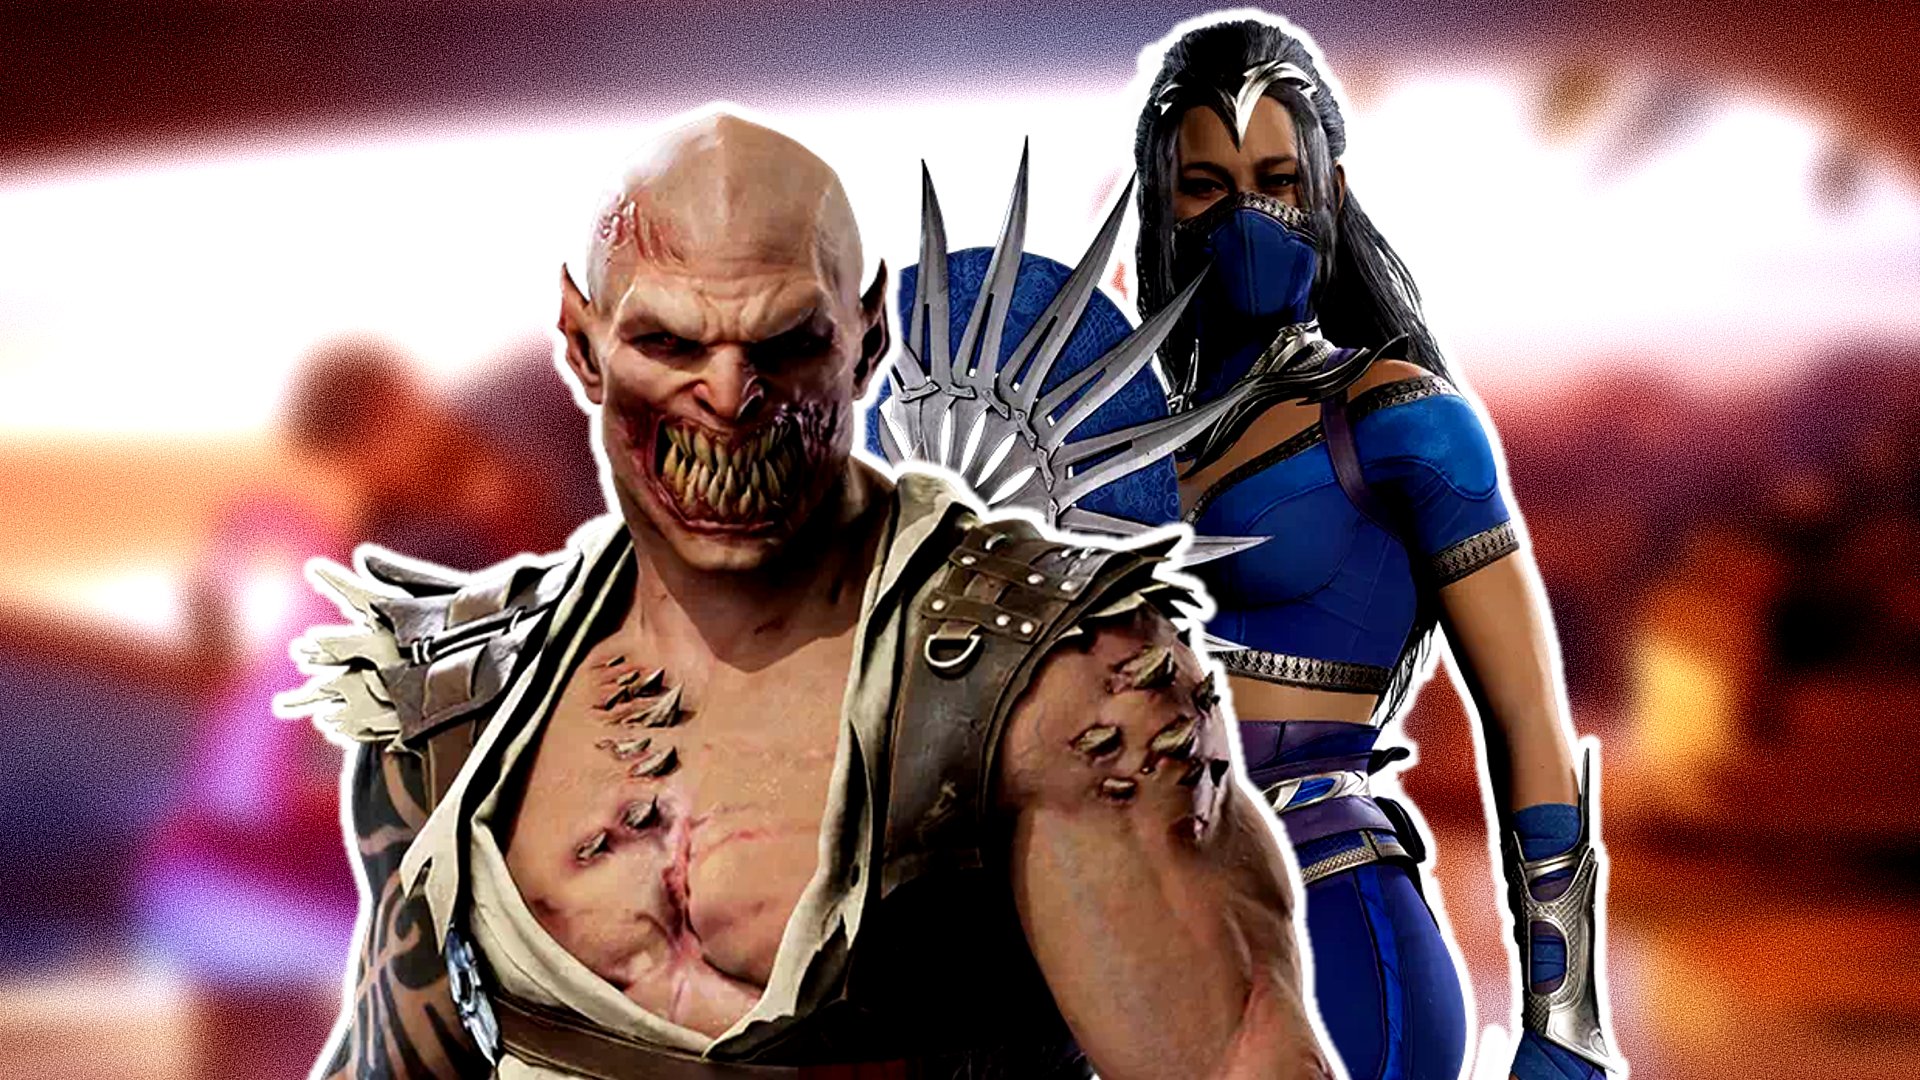 Mortal Kombat 1 leaks reveal Invasions, a new single-player mode